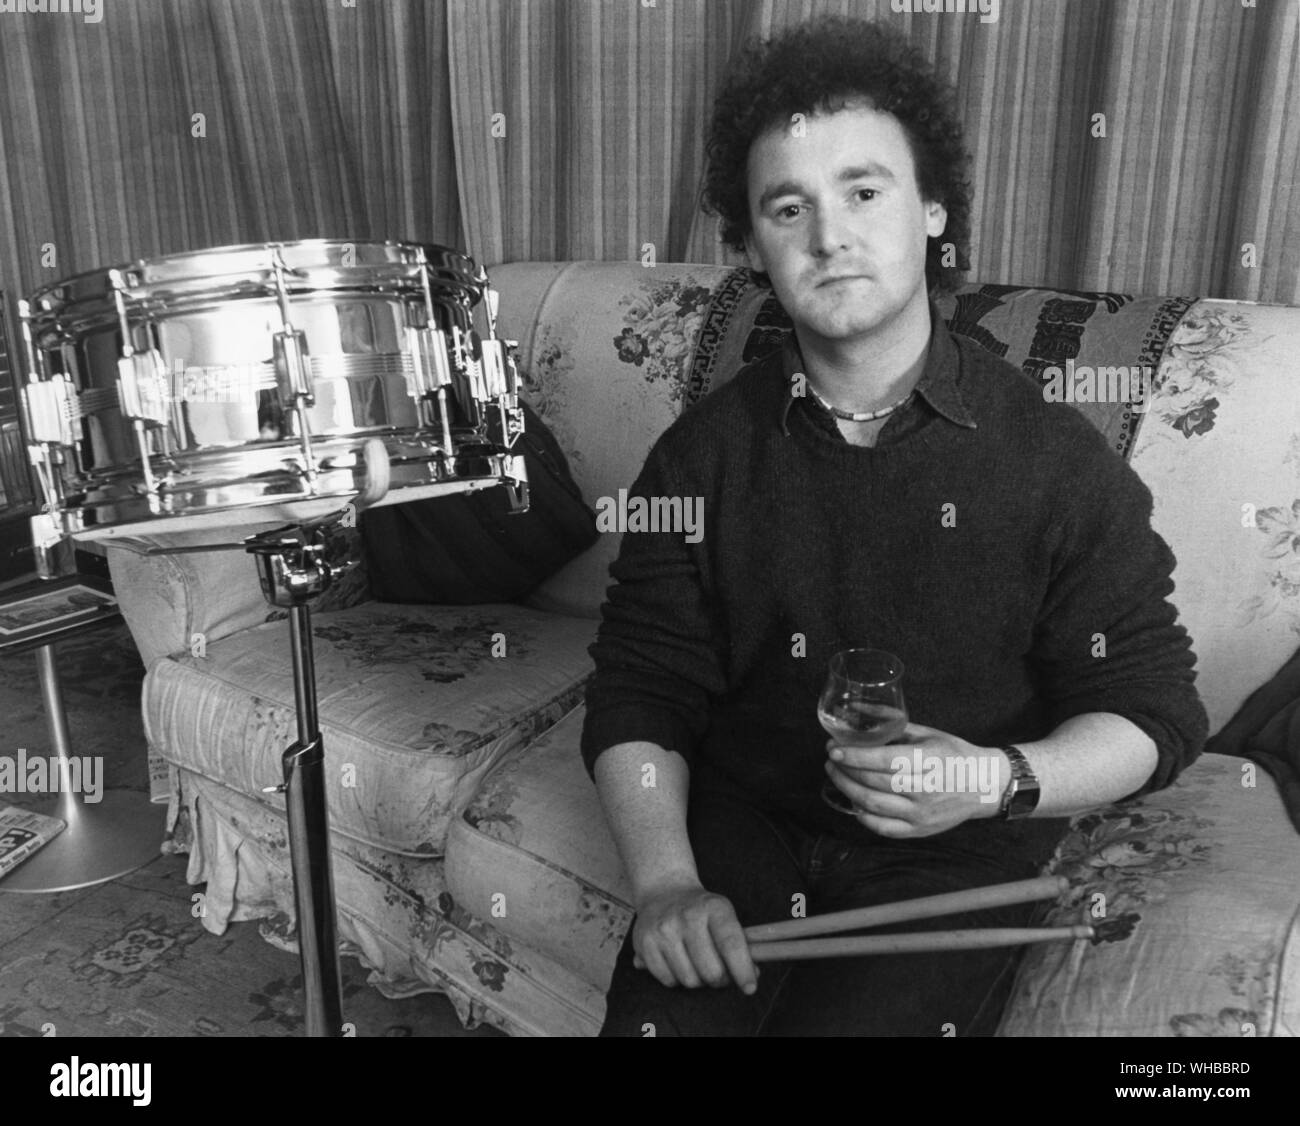 Gary Kettel - percussionist. Stock Photo